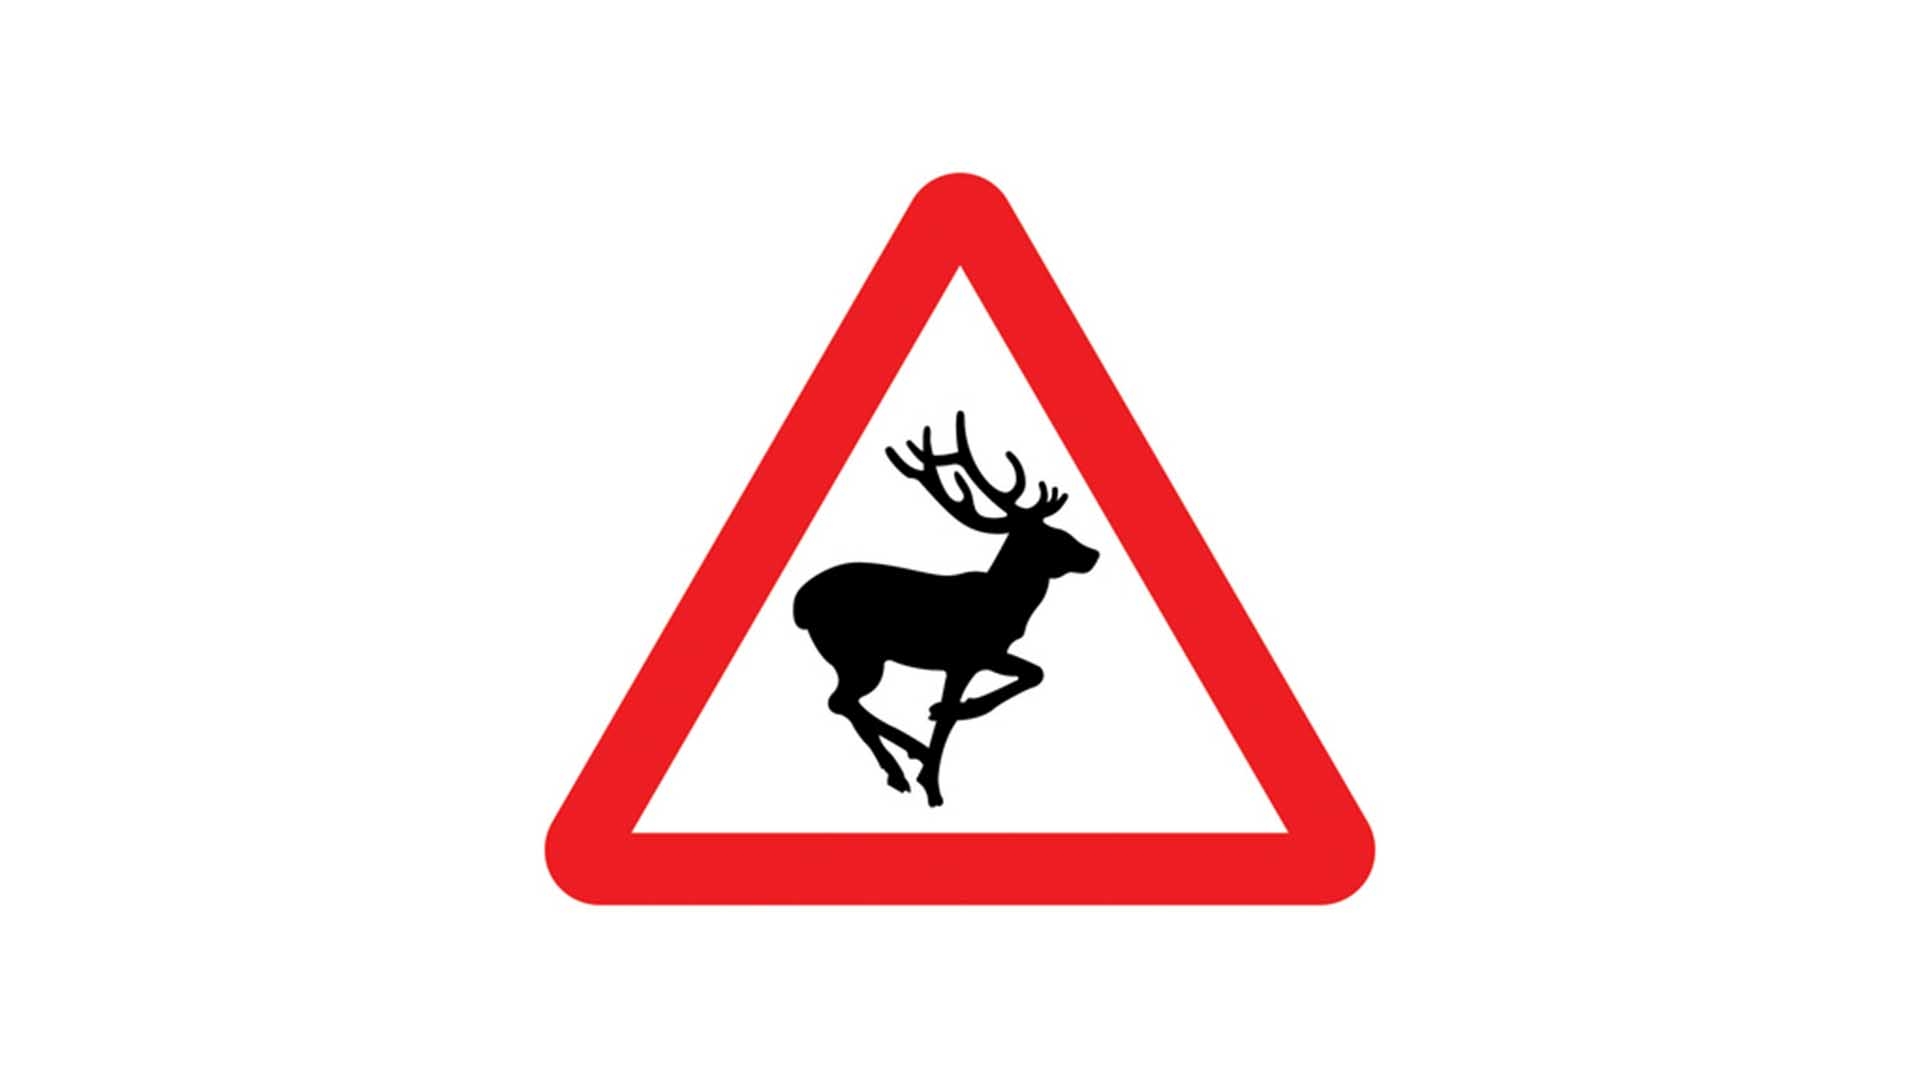 Wild animals road sign